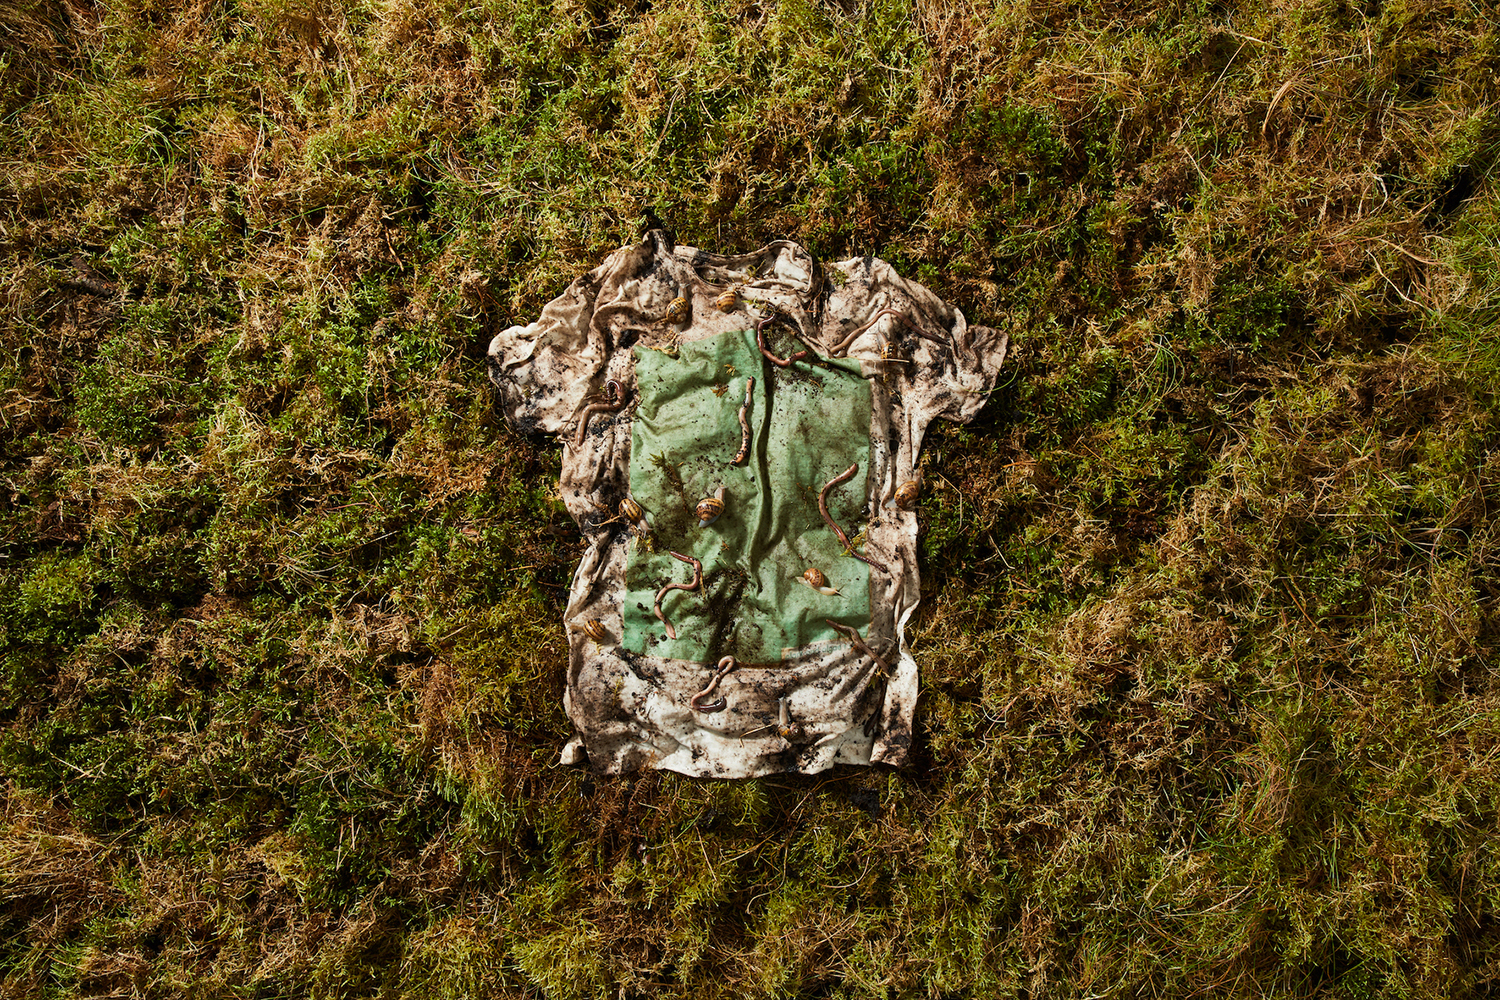 vollebak plant and algae t shirt